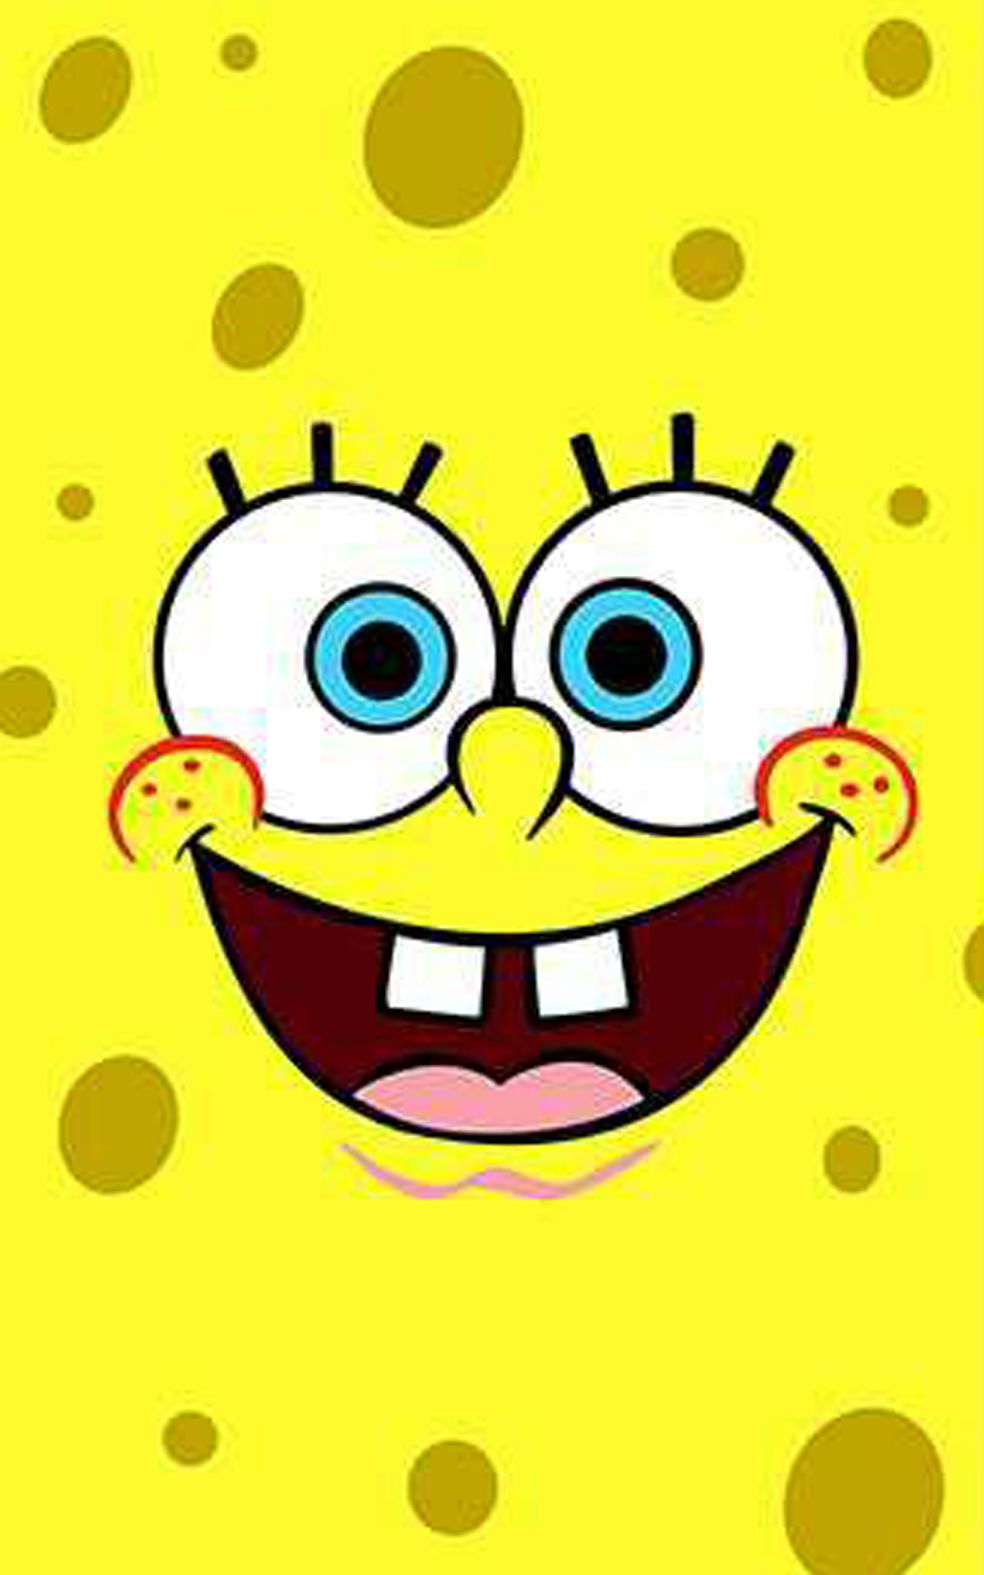 Spongebob SquarePants. Spongebob wallpaper, Cartoon wallpaper iphone, Spongebob iphone wallpaper